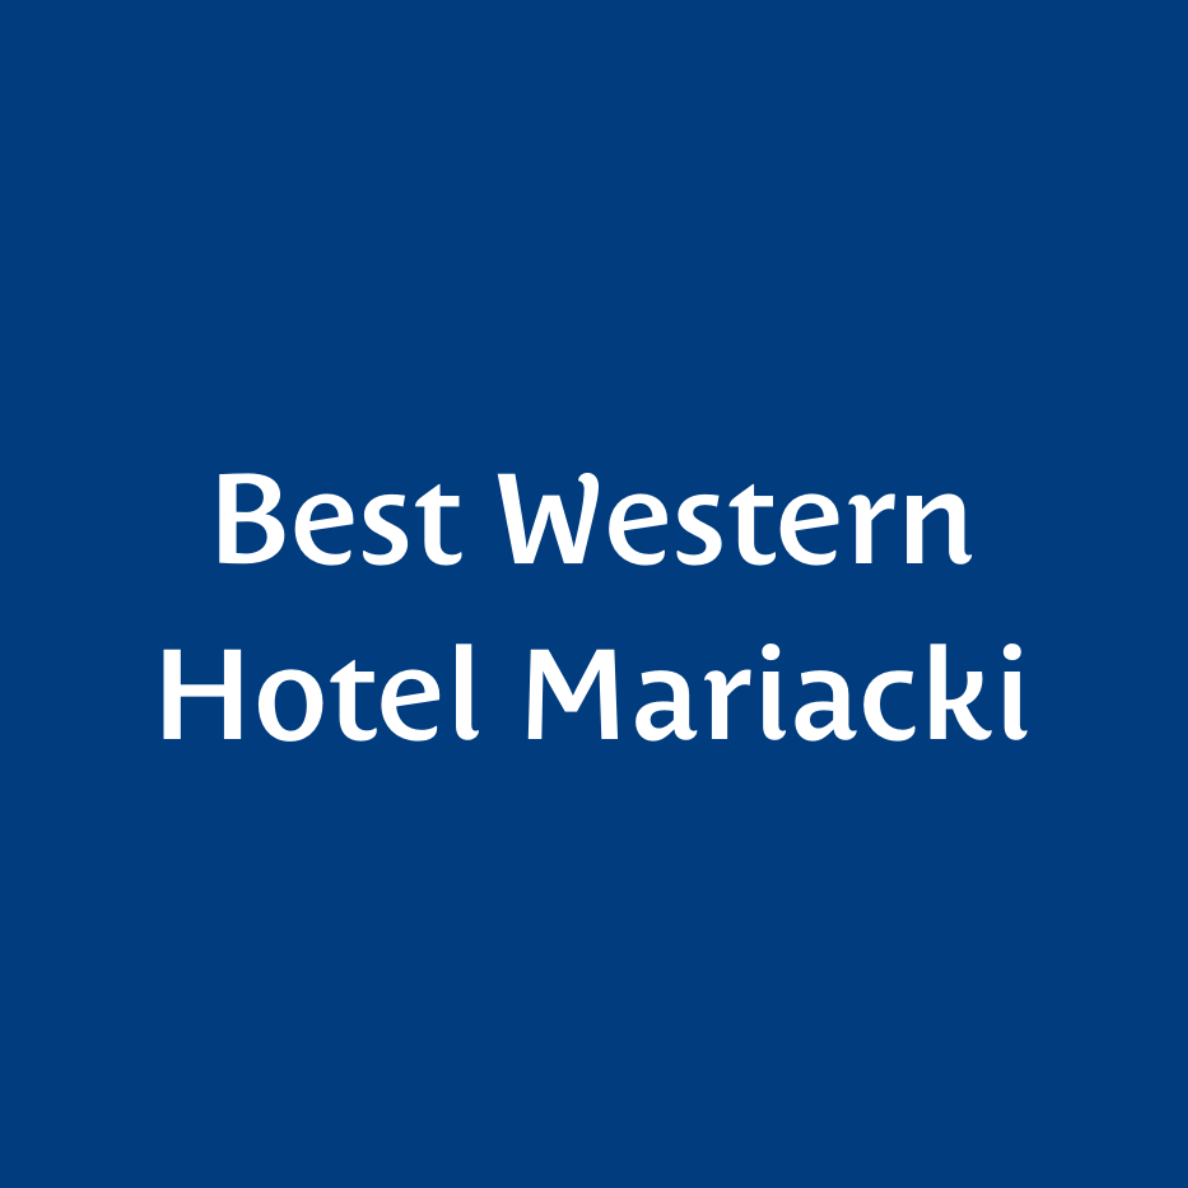 Hotel Mariacki